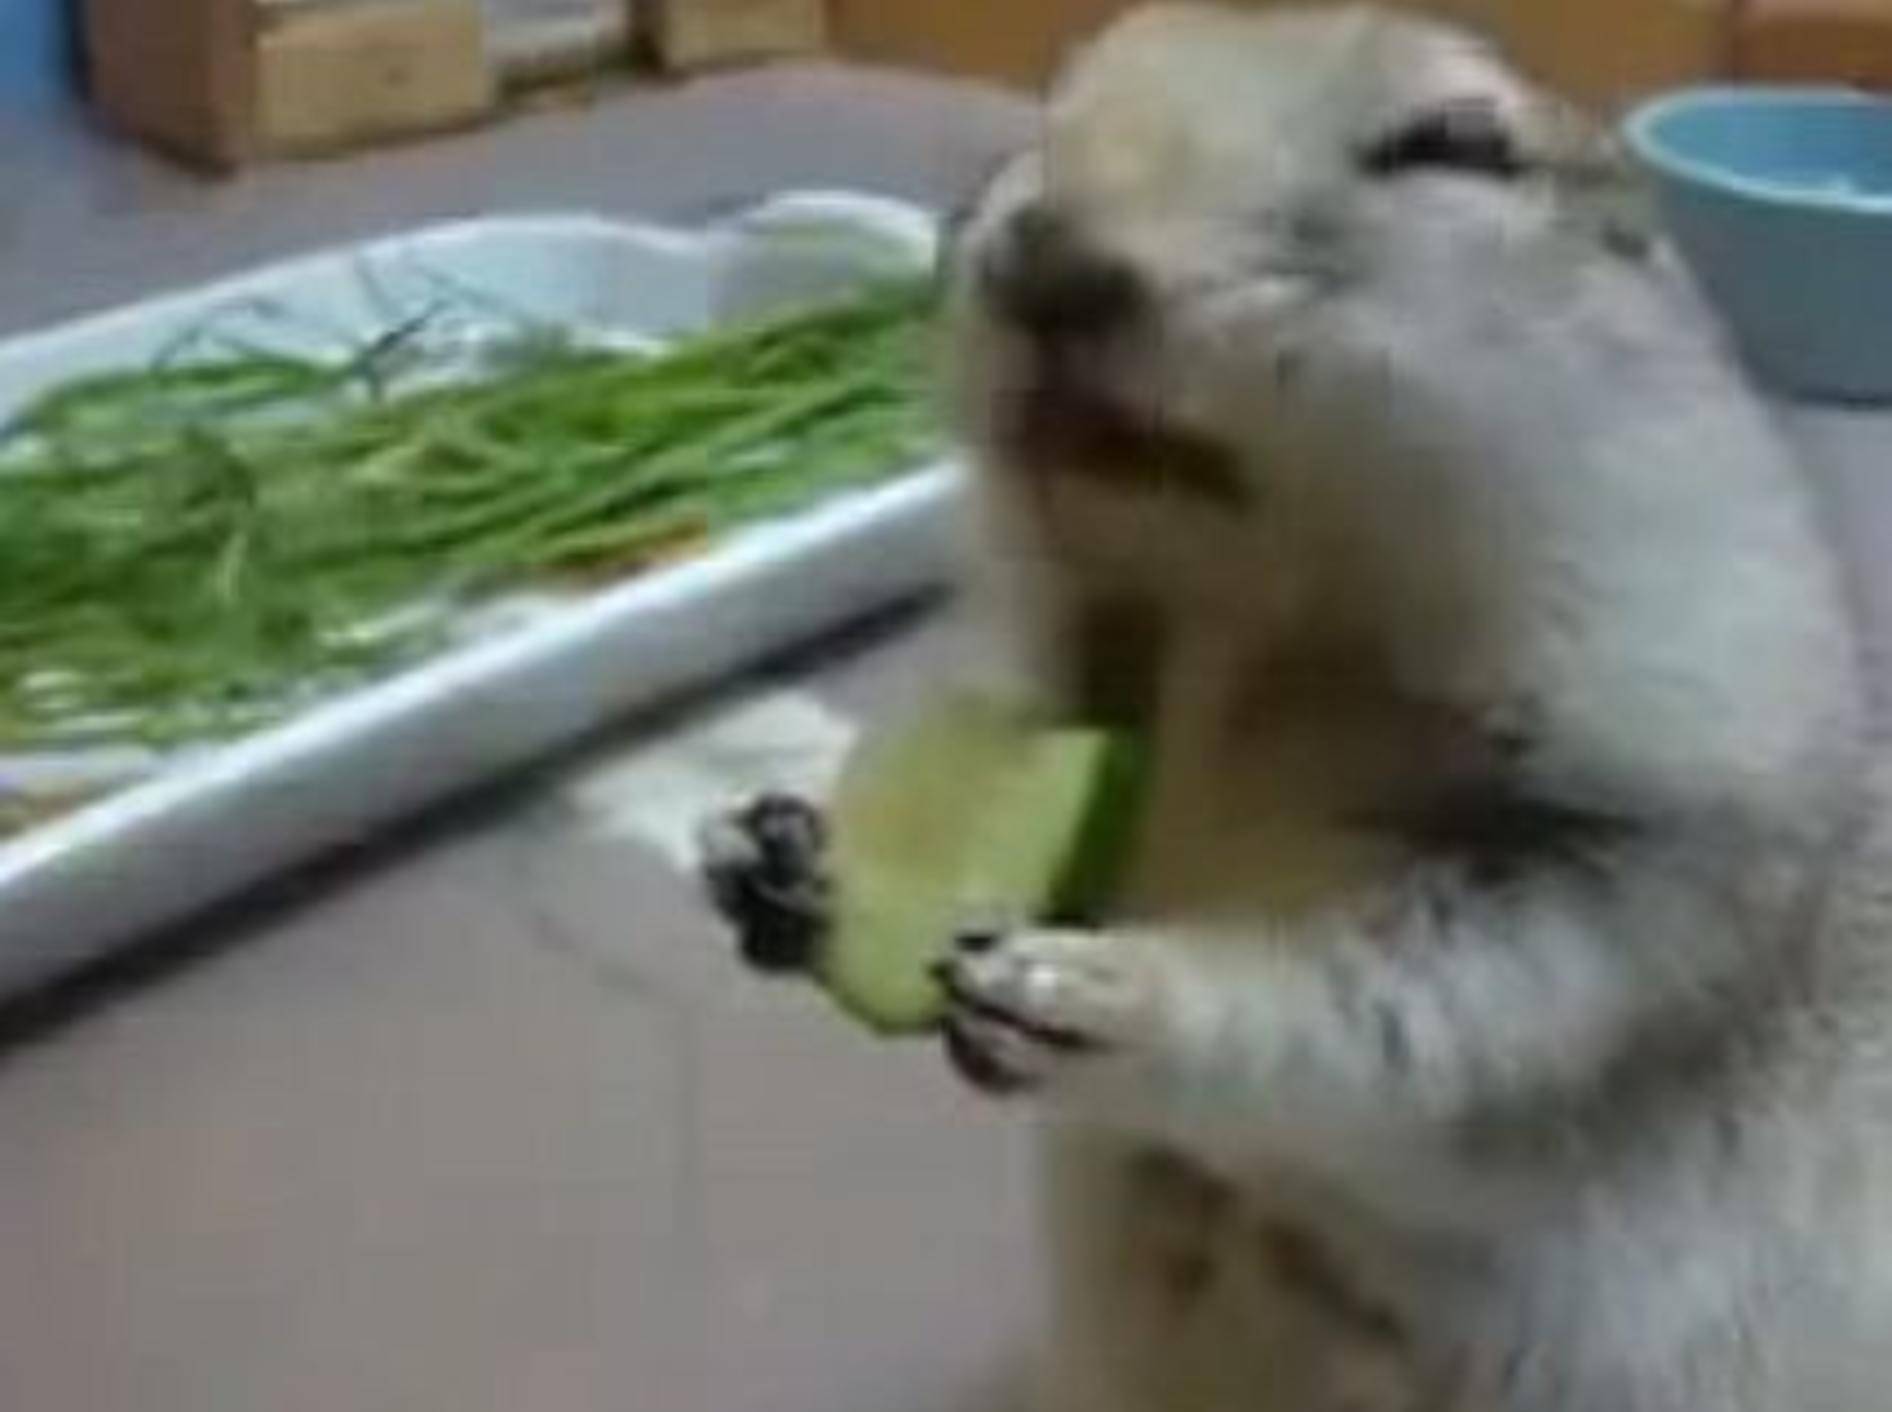 Putziges Hörnchen: Lecker, Gurke! – Bild: Youtube / funnyvideos215